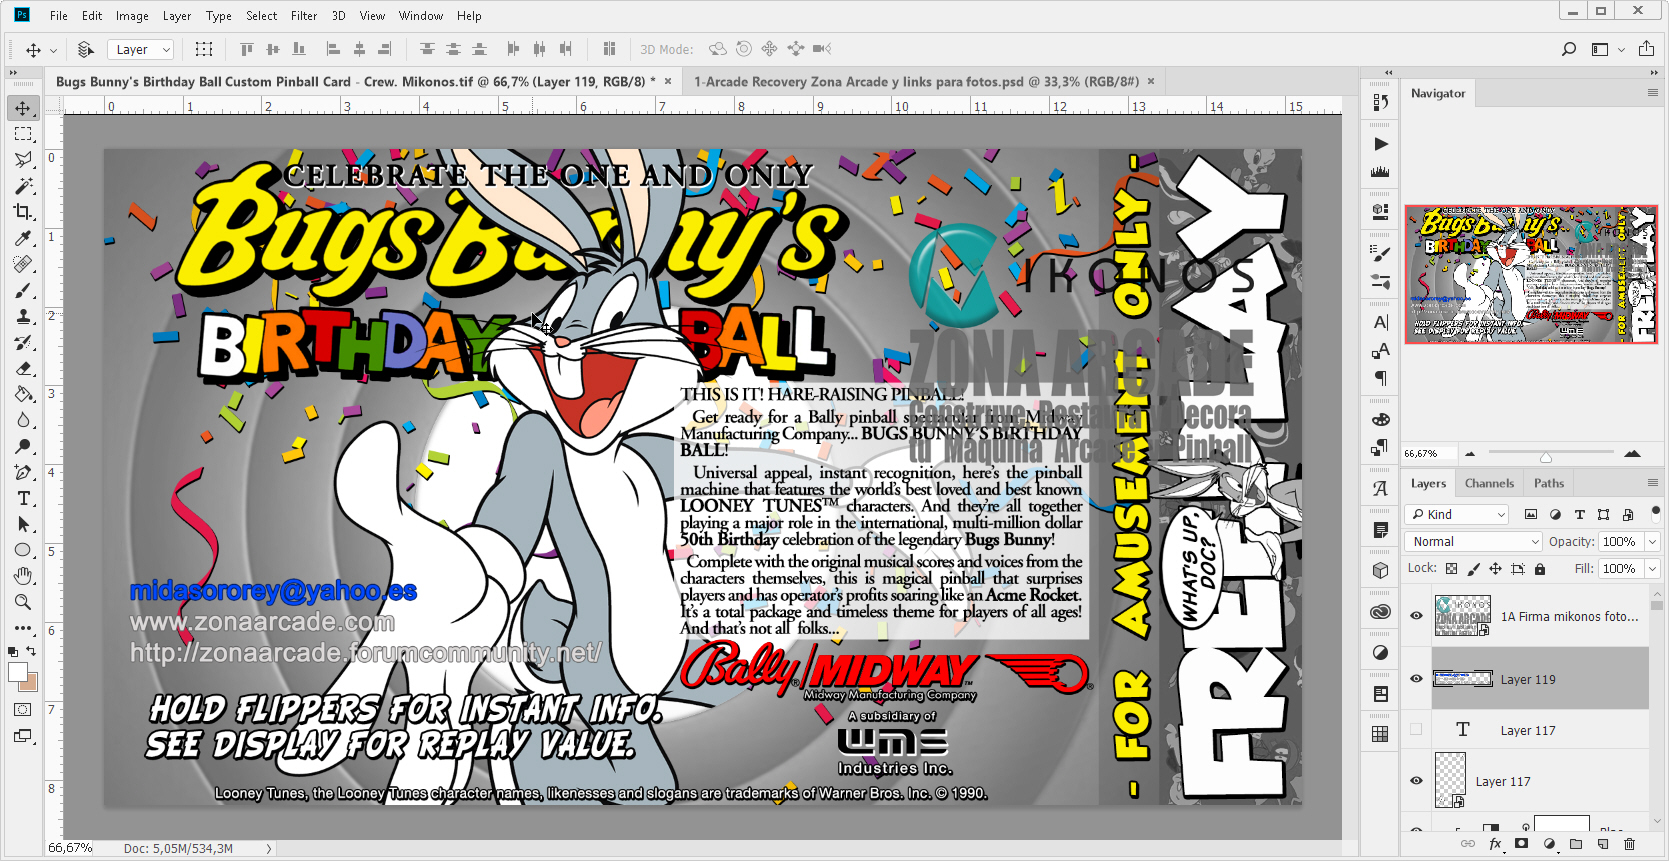 Bugs-Bunny's-Birthday-Ball-Custom-Pinball-Card-Free-Play-Mikonos1